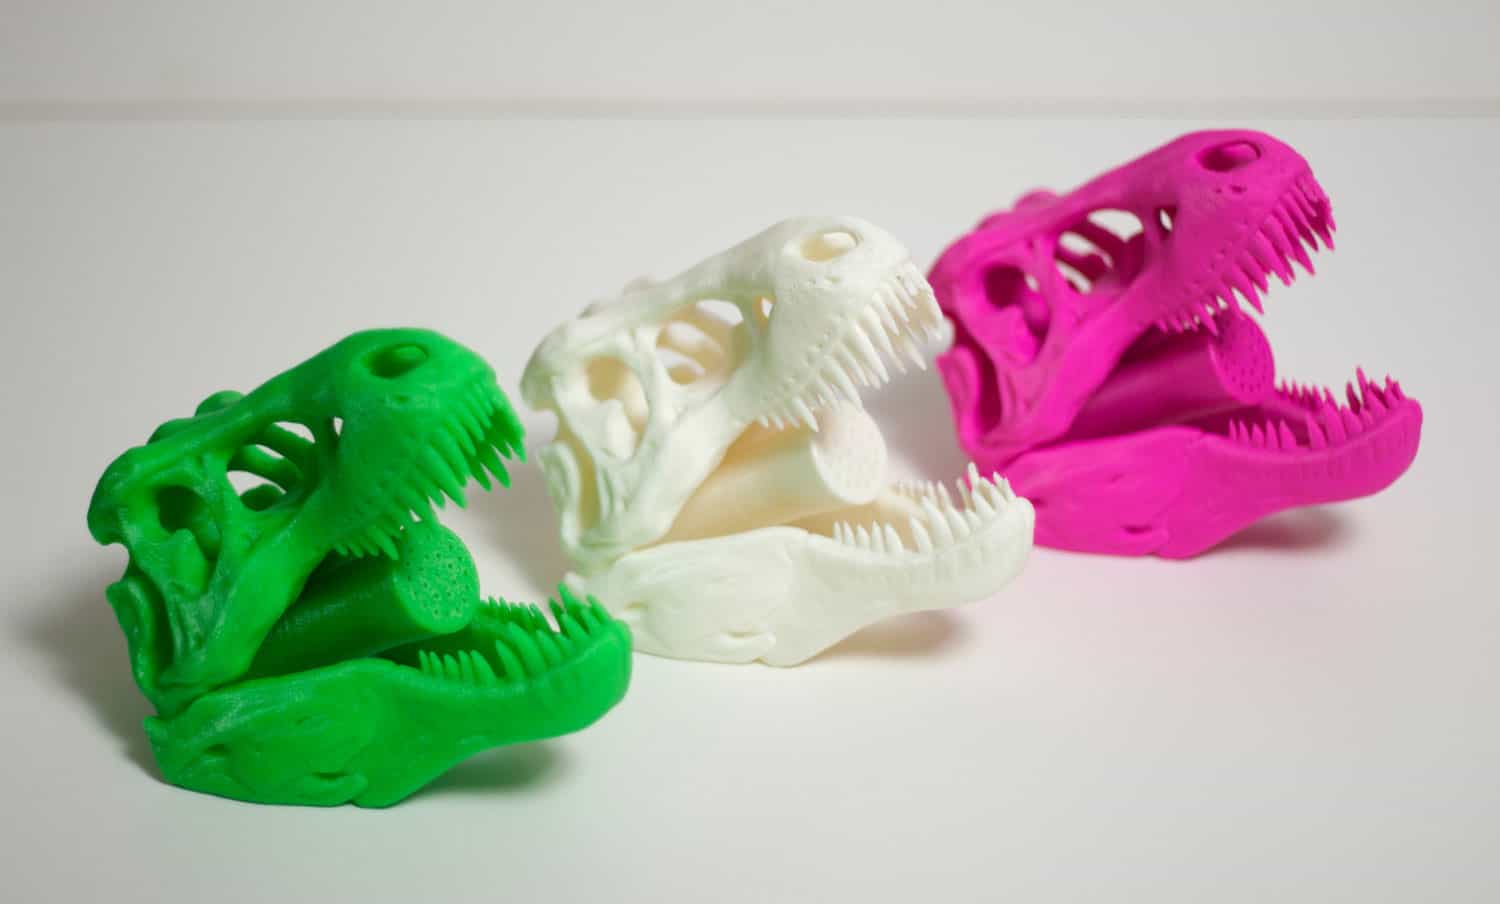 Pixel and Print 3D Printed Skull Shower Head Creative Fixture Design